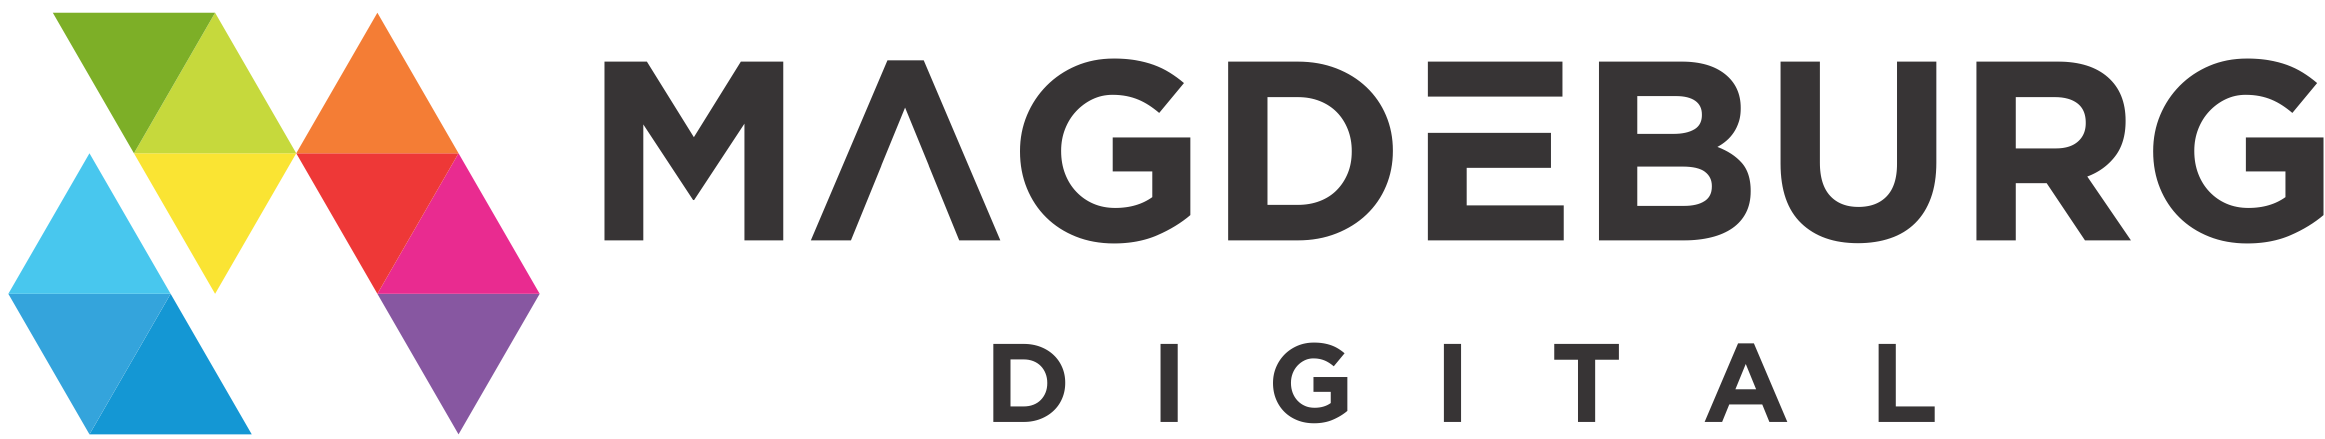 Magdeburg Digital